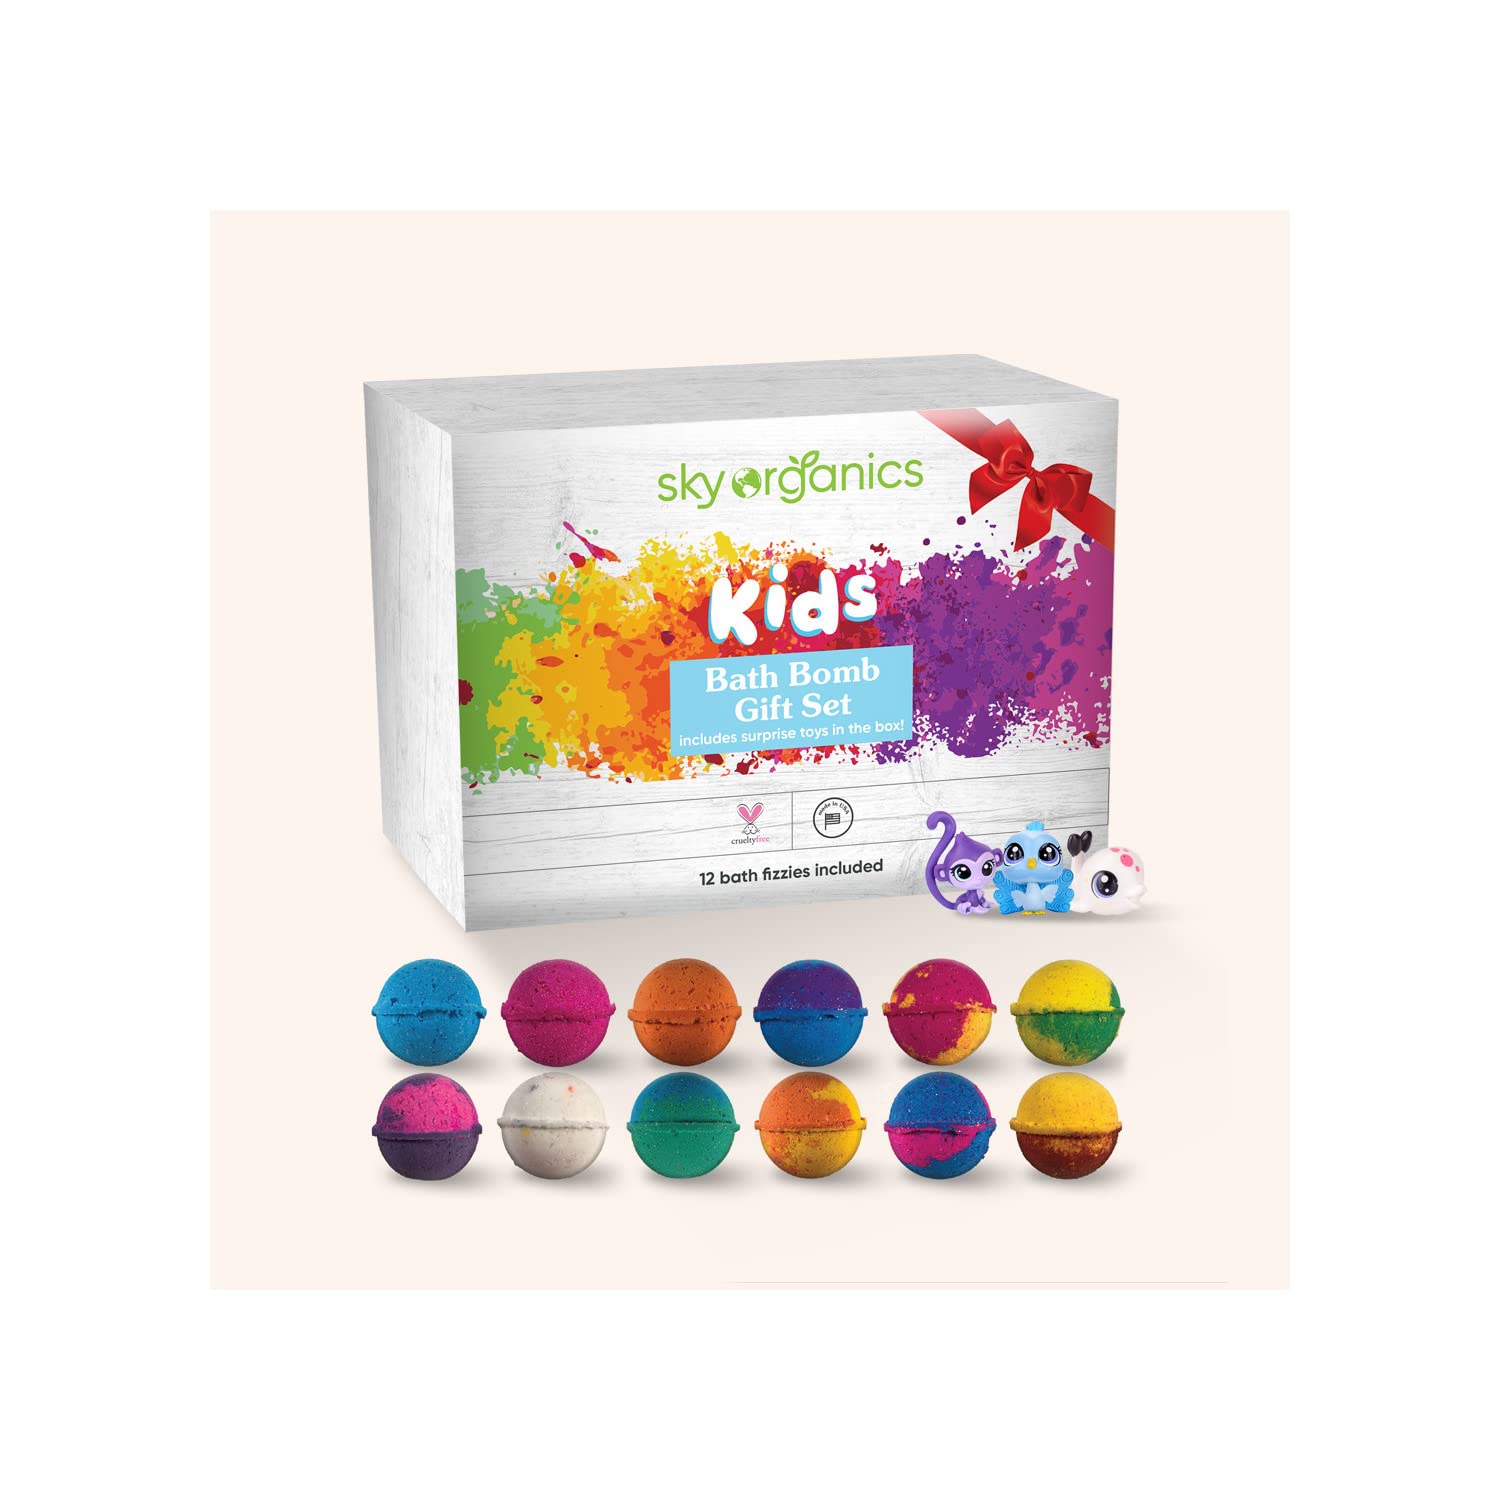 Sky Organics Kids Bath Bomb Gift Set for Body to Soak, Nourish & Enjoy, 12 ct.